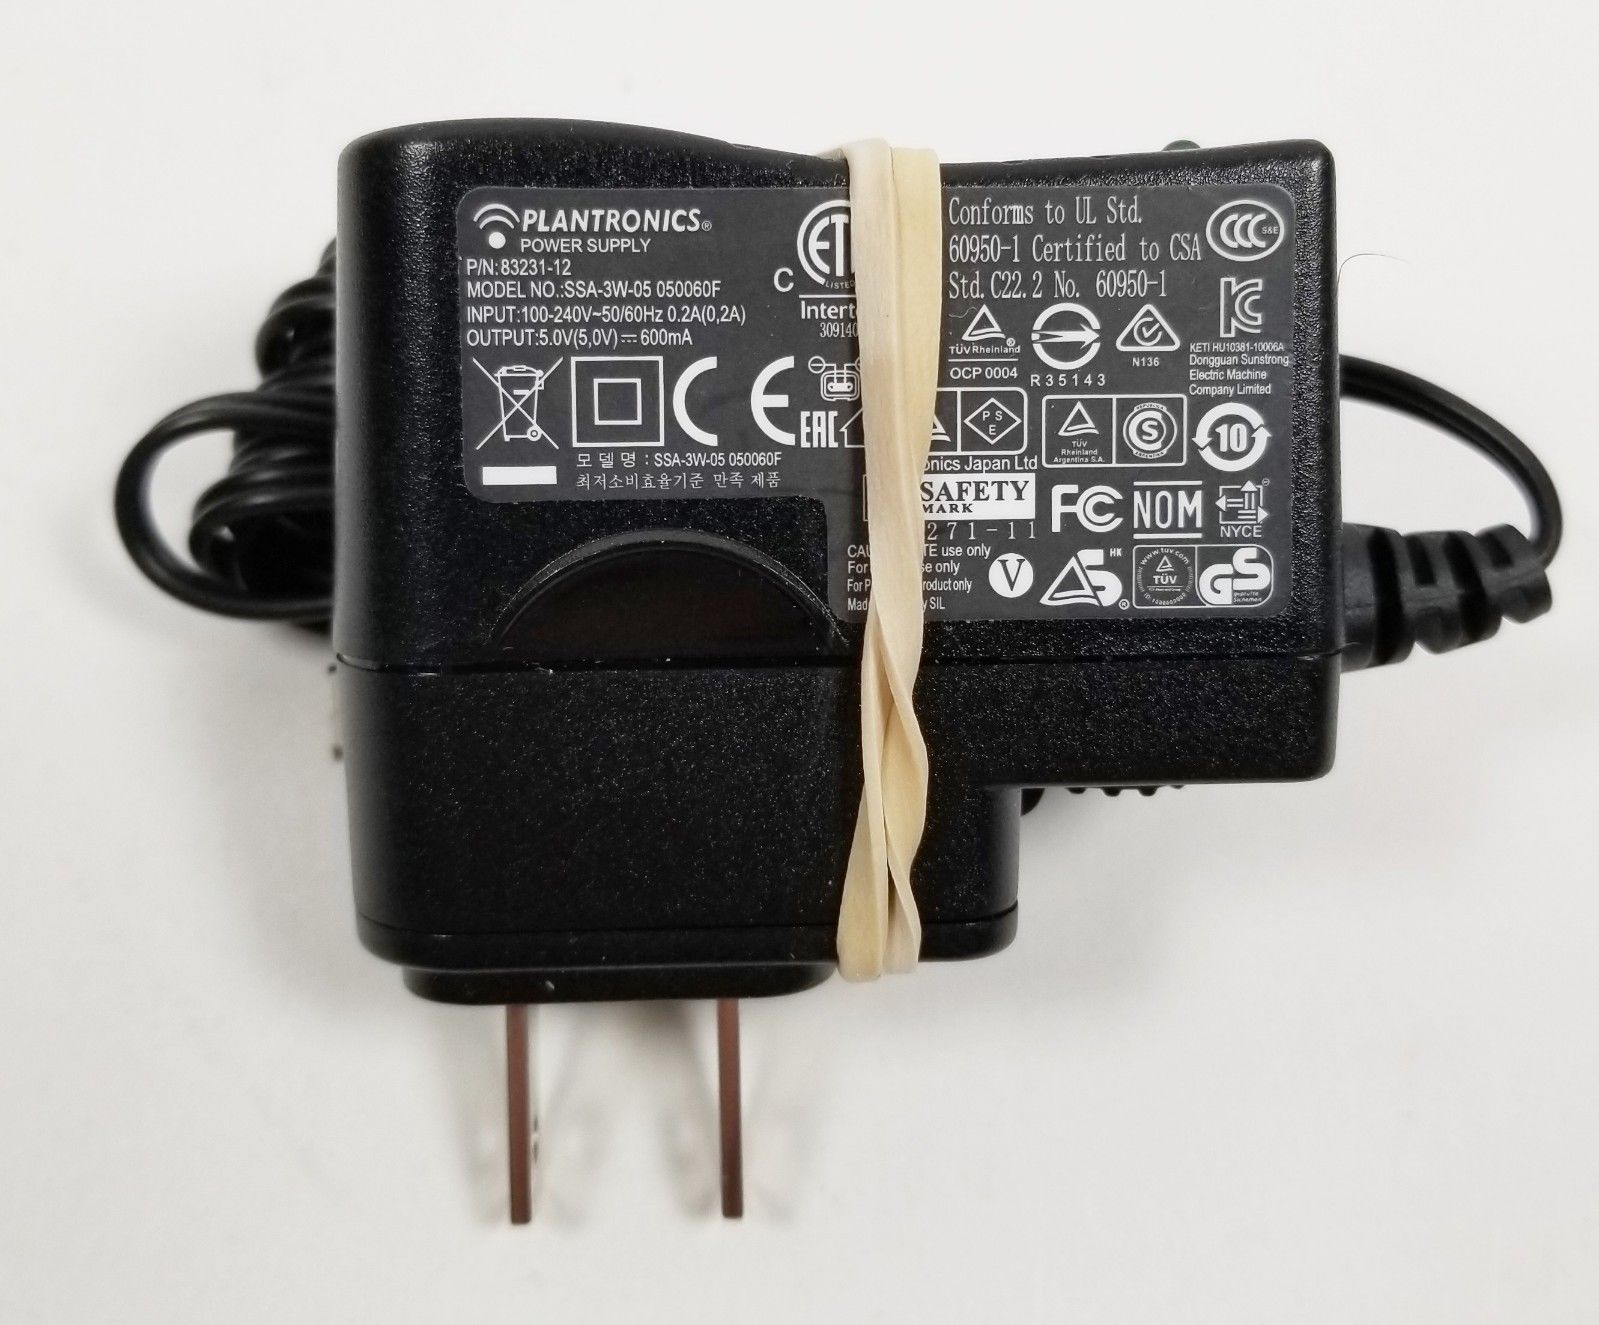 PLANTRONICS AC Adapter Power Supply Micro-USB 83231-12 SSA-3W-05 050060F Brand: Plantronics Style: Power Adapter MP - Click Image to Close